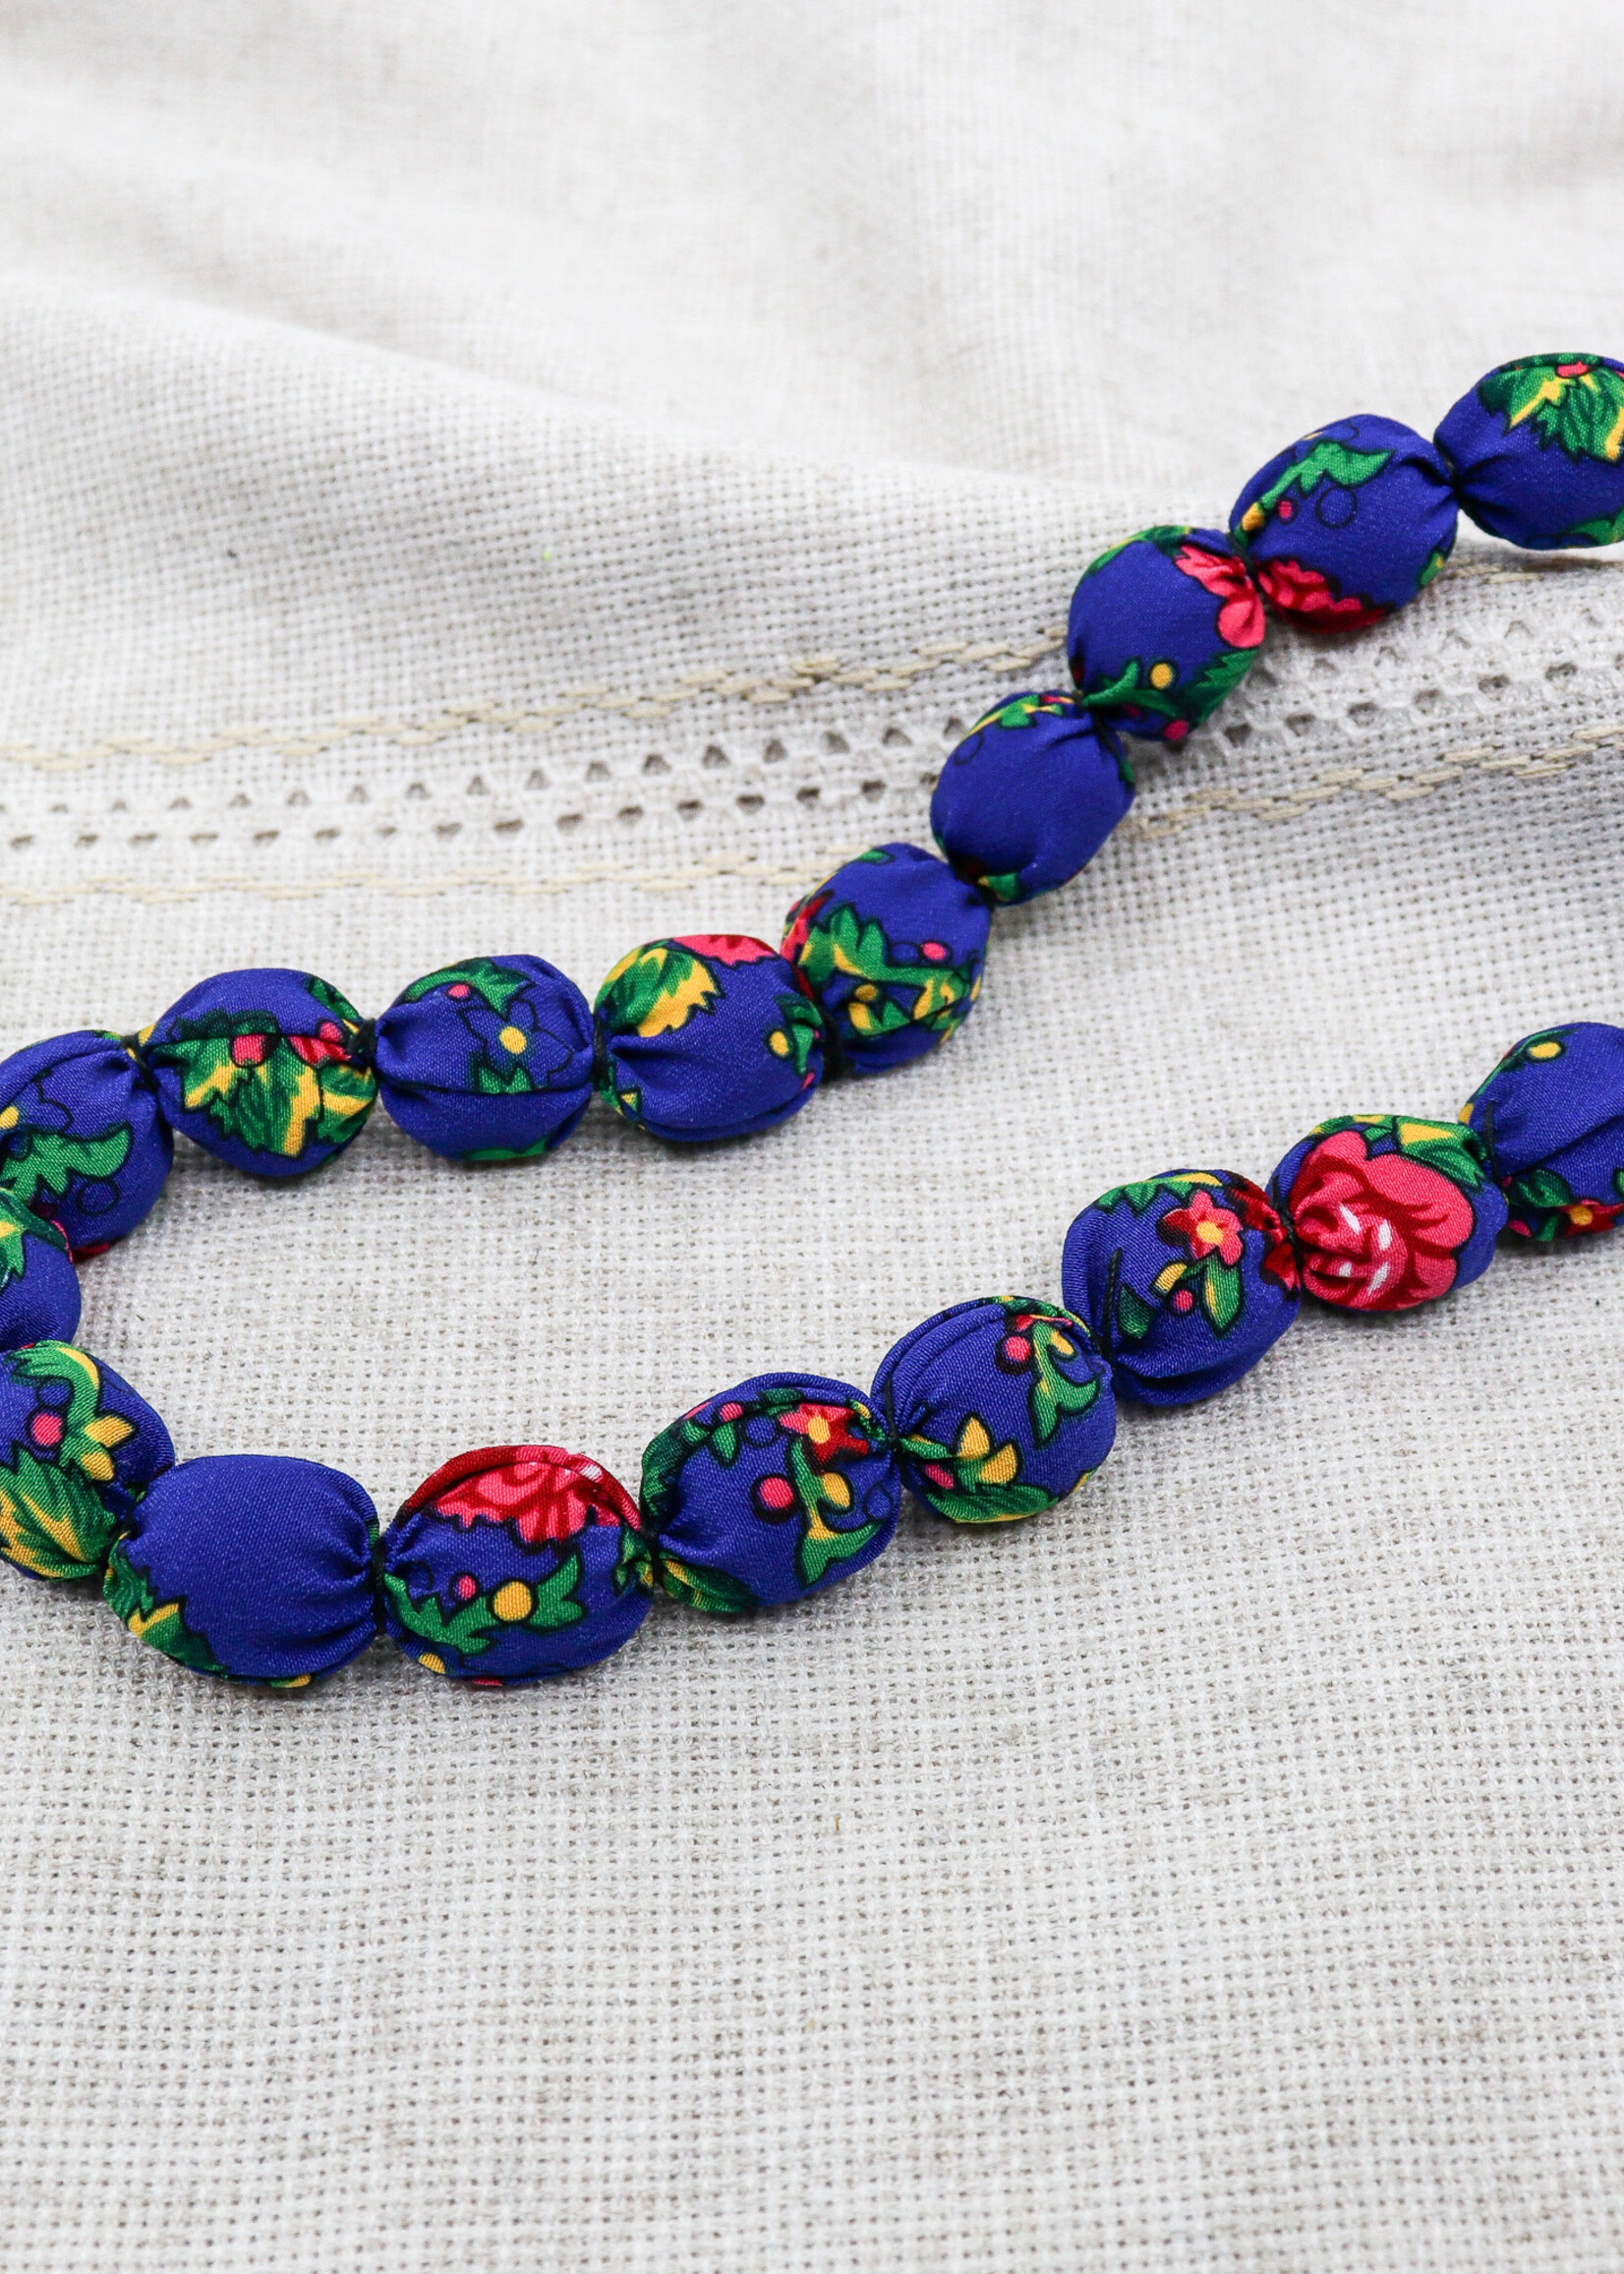 ACCESSORIES - Necklace  Handmade of Wooden Beads / Hustka Fabrics